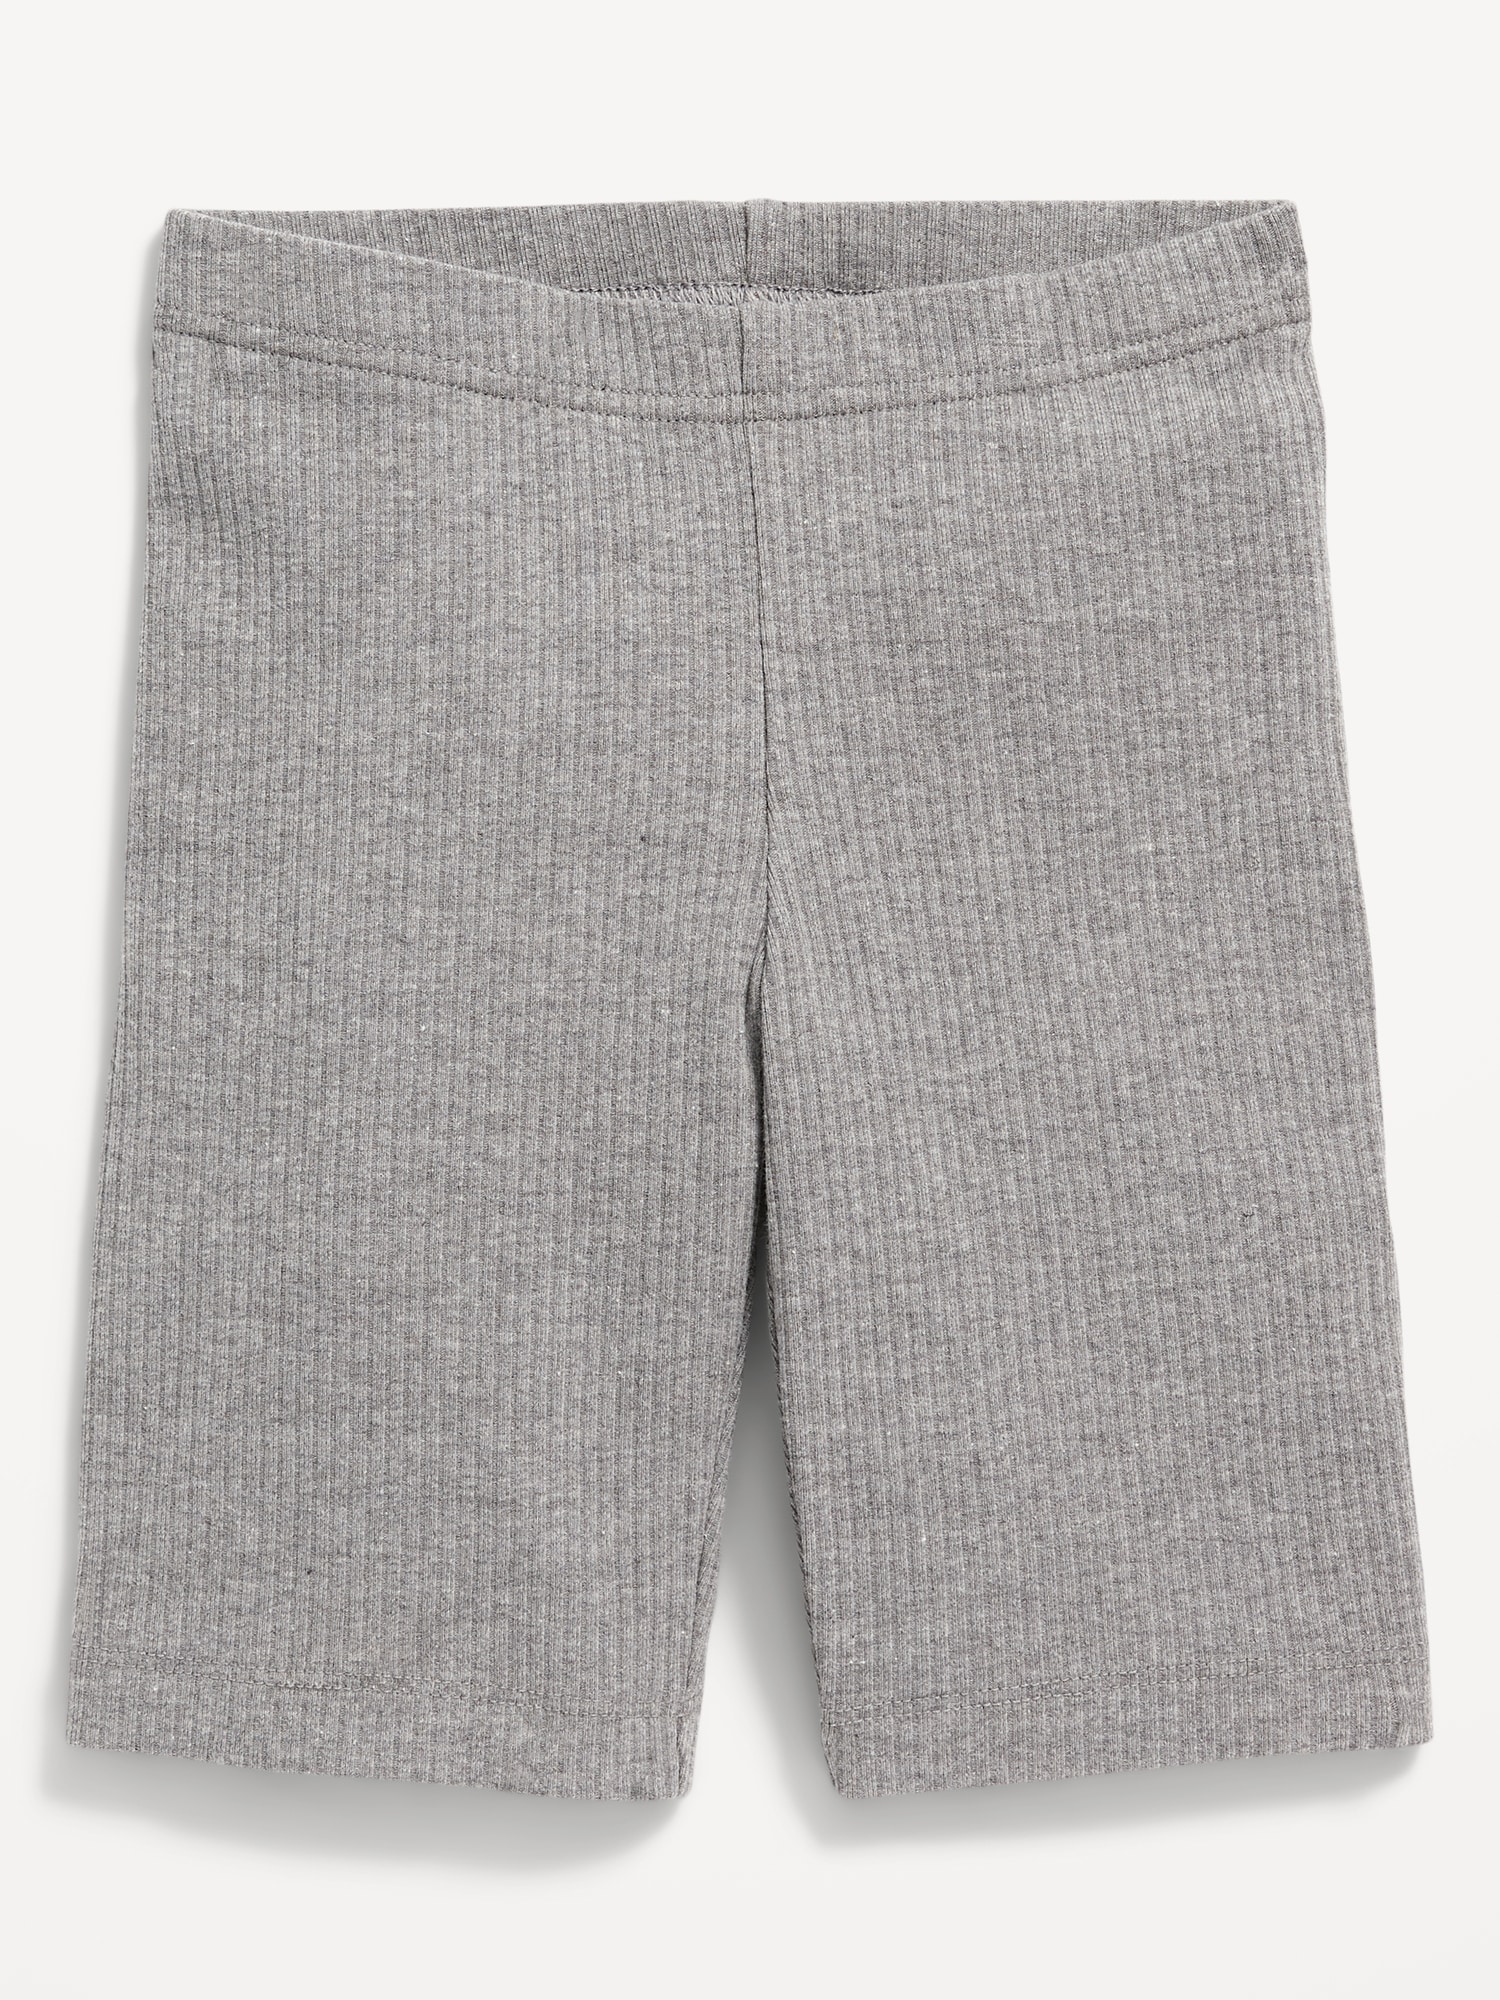 Old Navy Rib-Knit Long Biker Shorts for Girls gray. 1